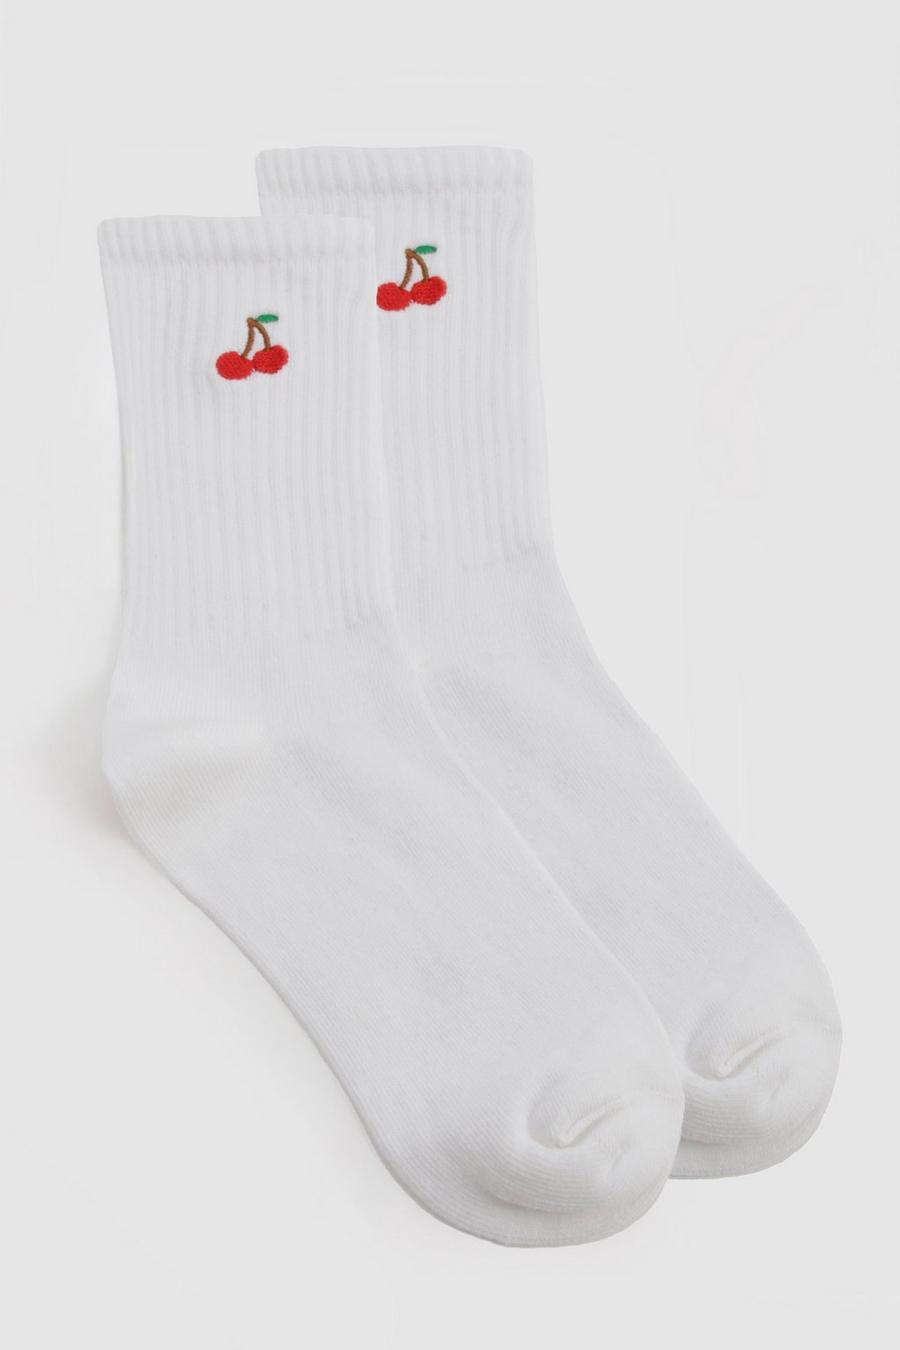 White Embroidered Cherry Socks  